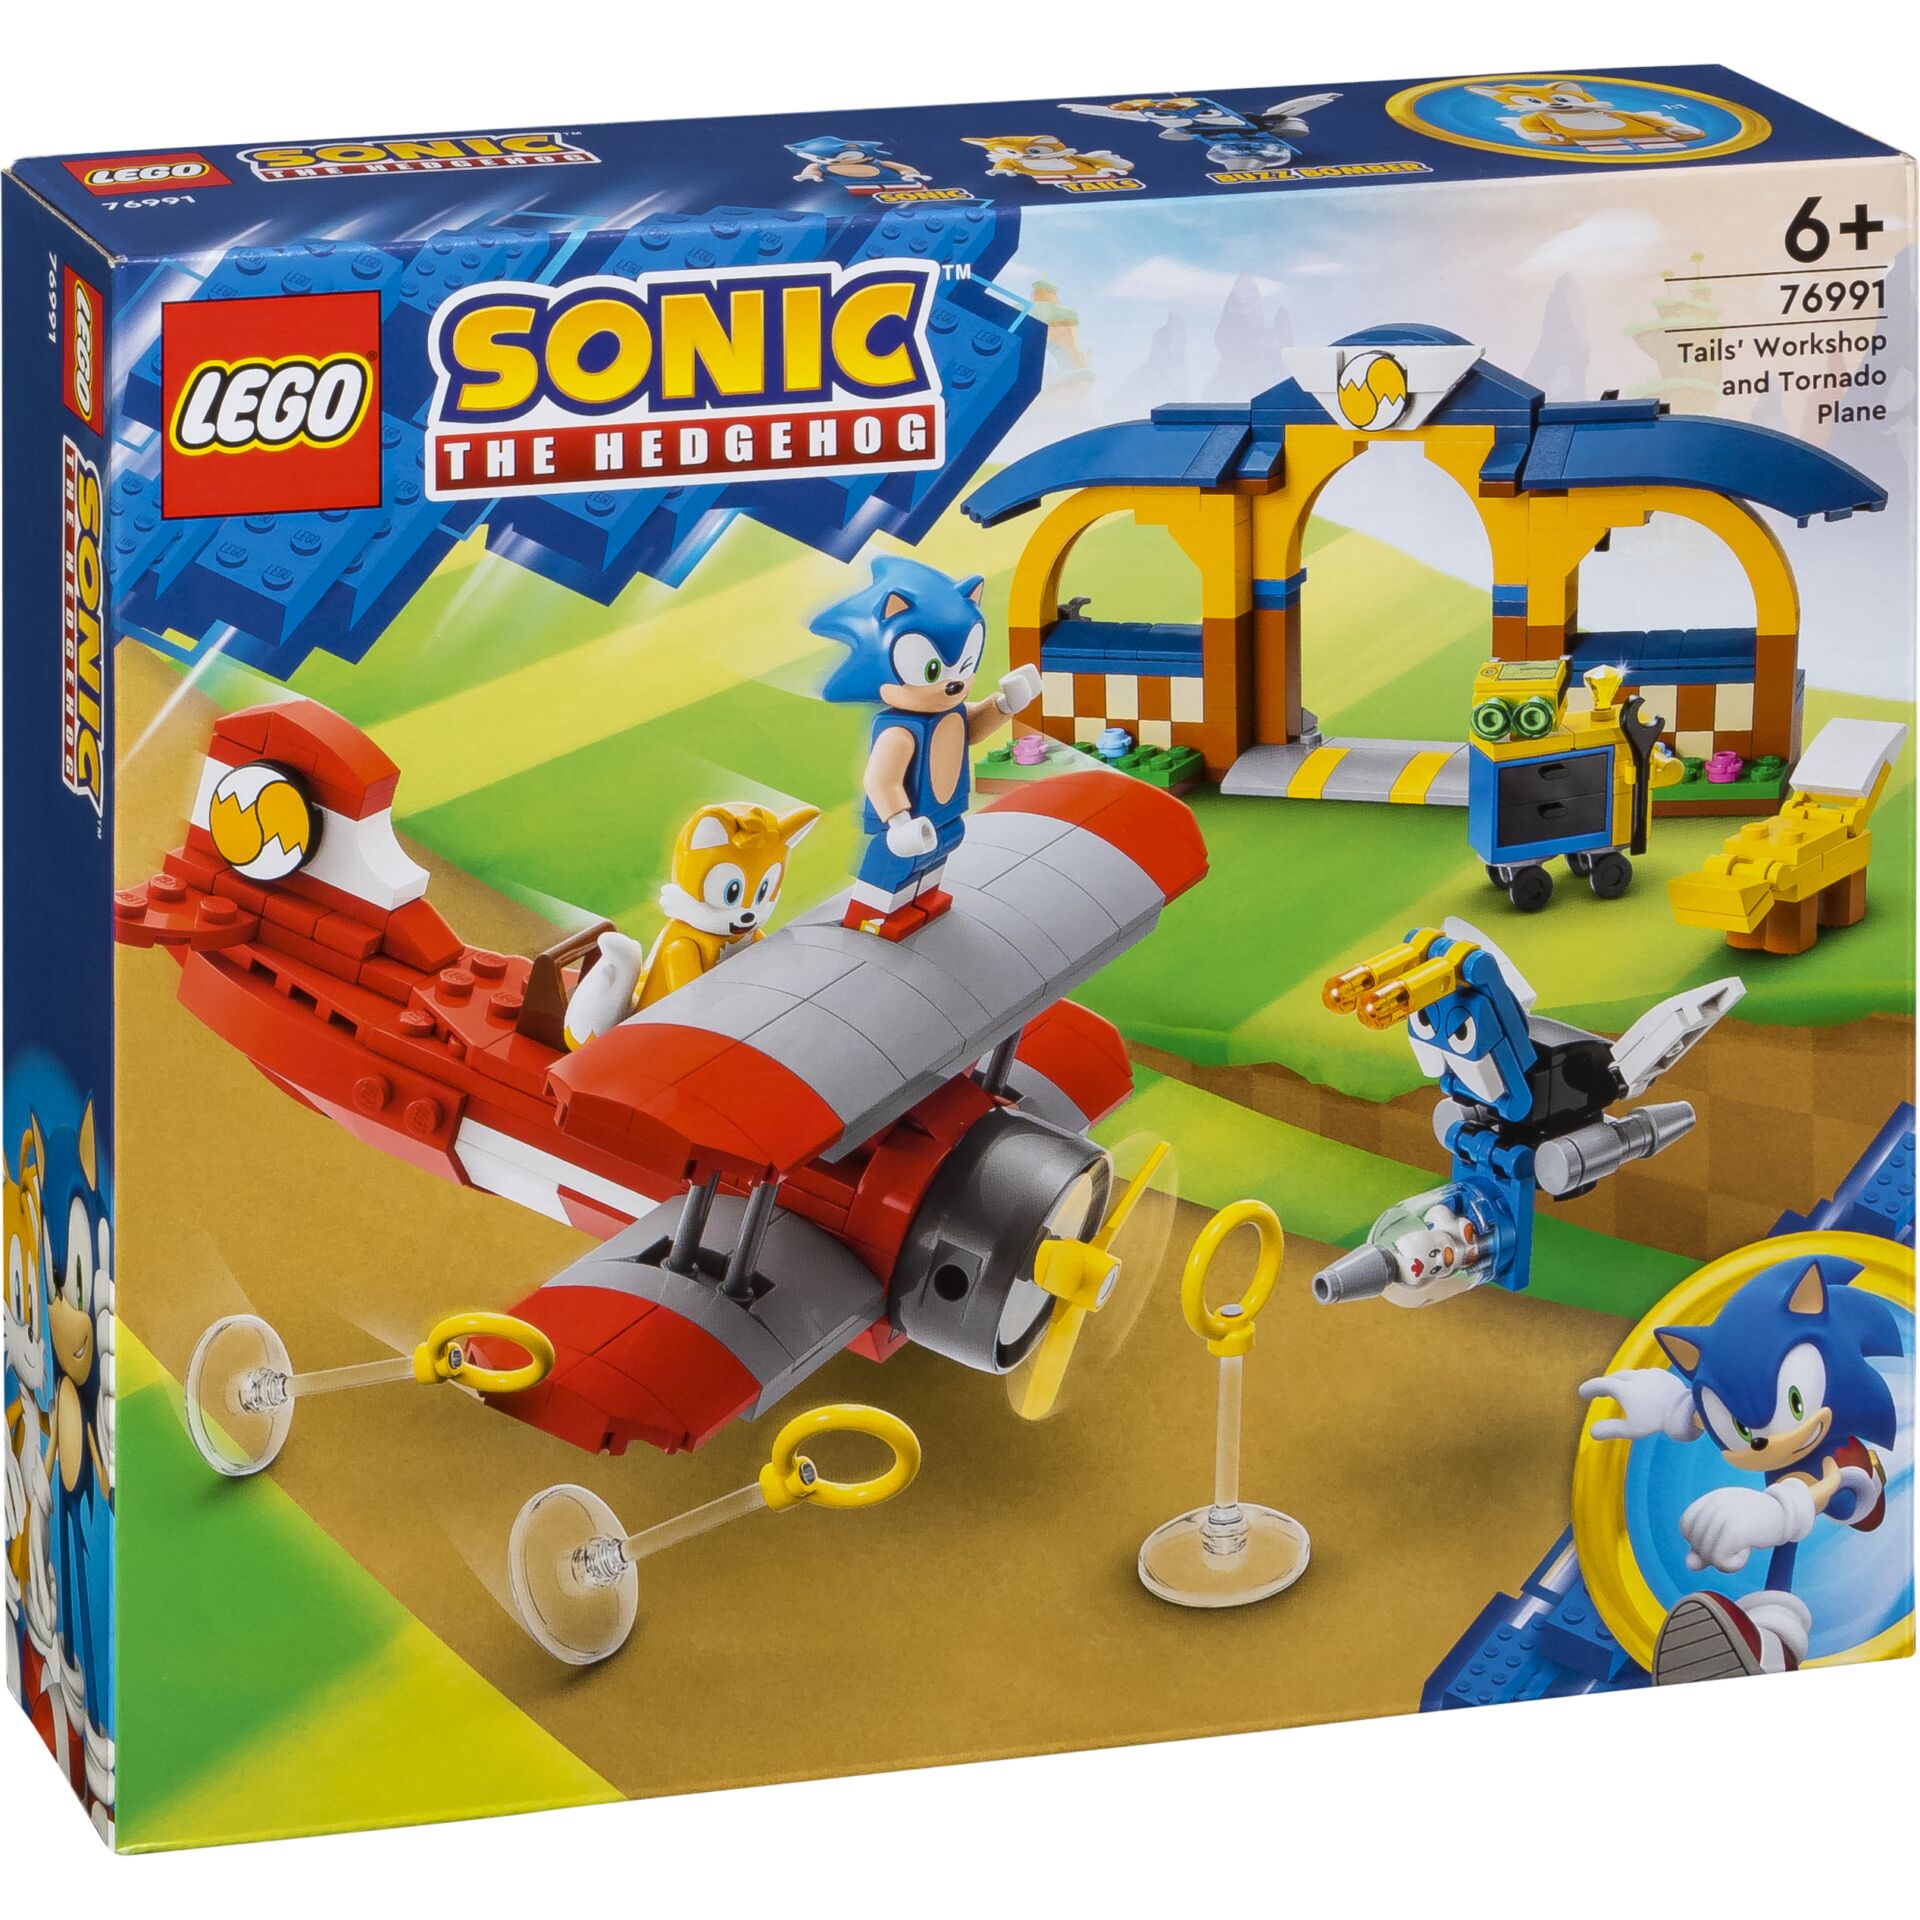 LEGO IDEAS 76991          Tail's Workshop and Tornado Plane